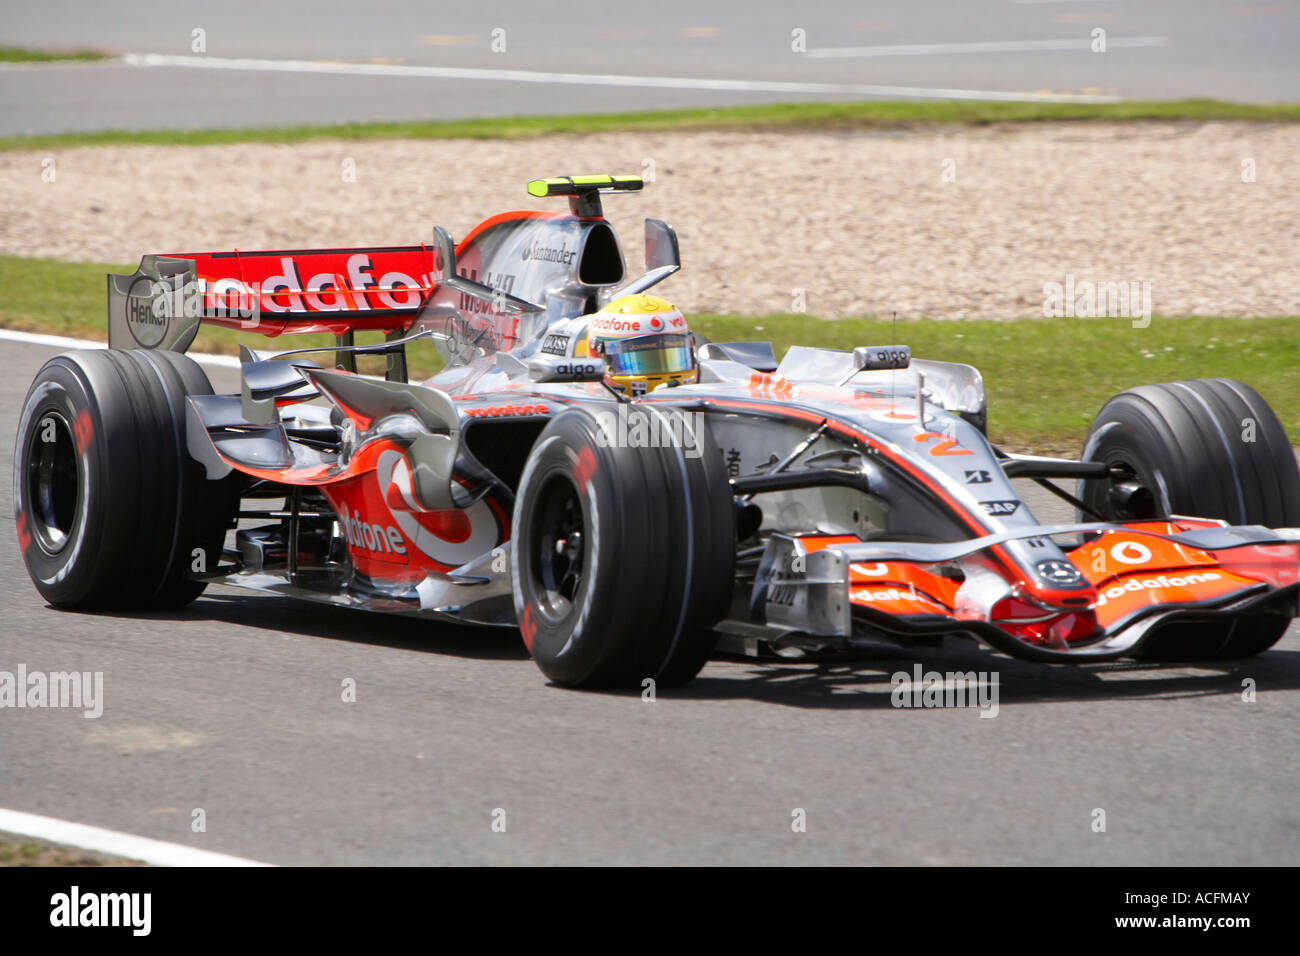 Lewis Hamilton driving his McLaren-Mercedes at the British Grand Prix 2007 Stock Photo